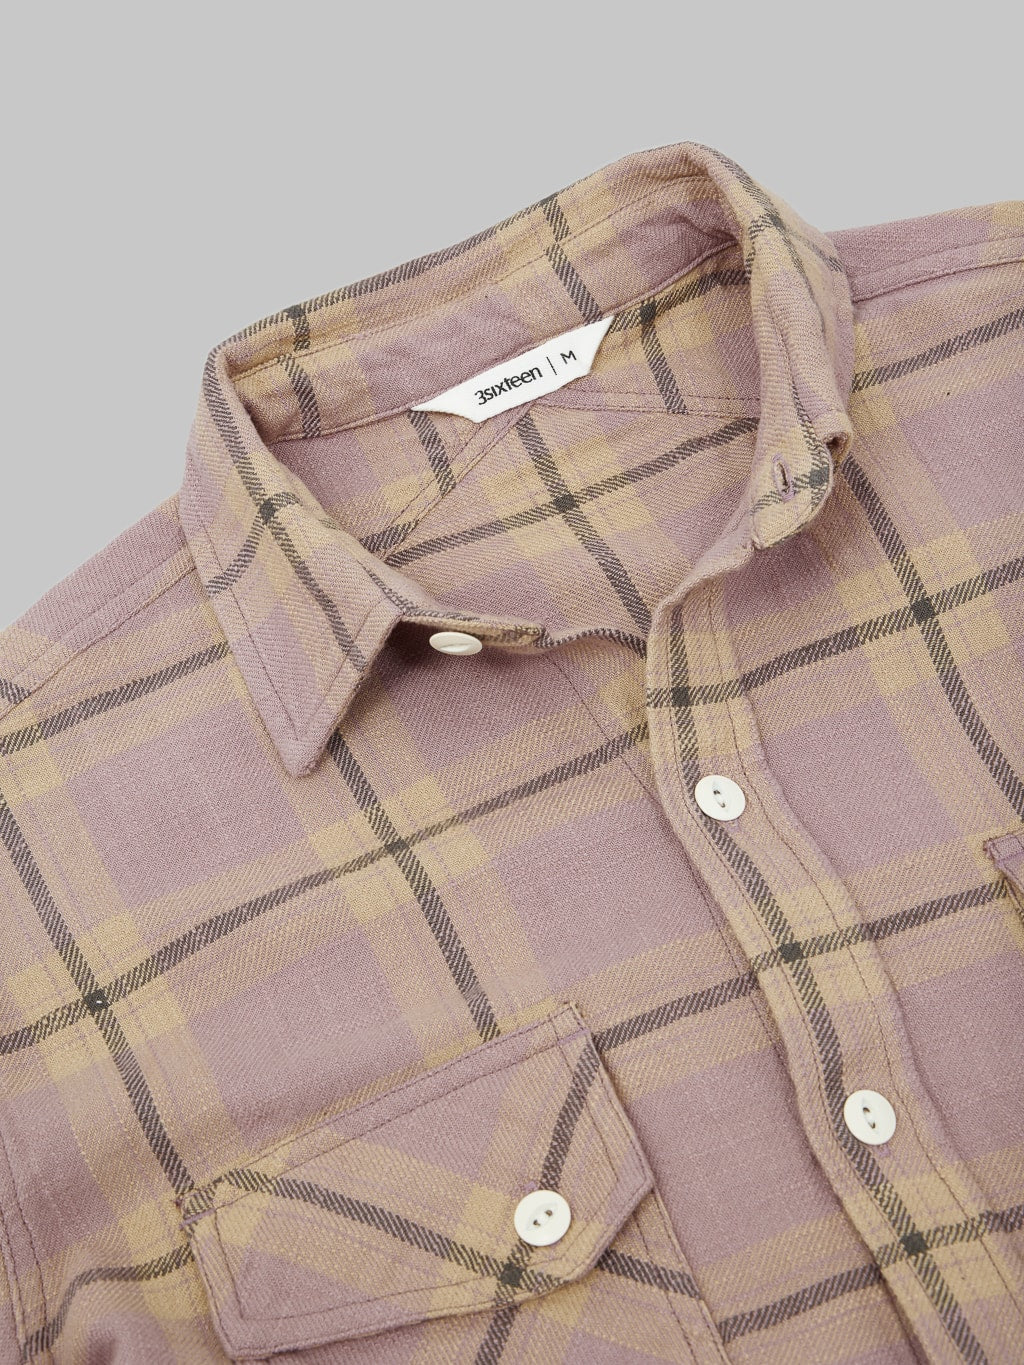 3sixteen Crosscut Flannel Mauve Slub Check shirt size interior tag